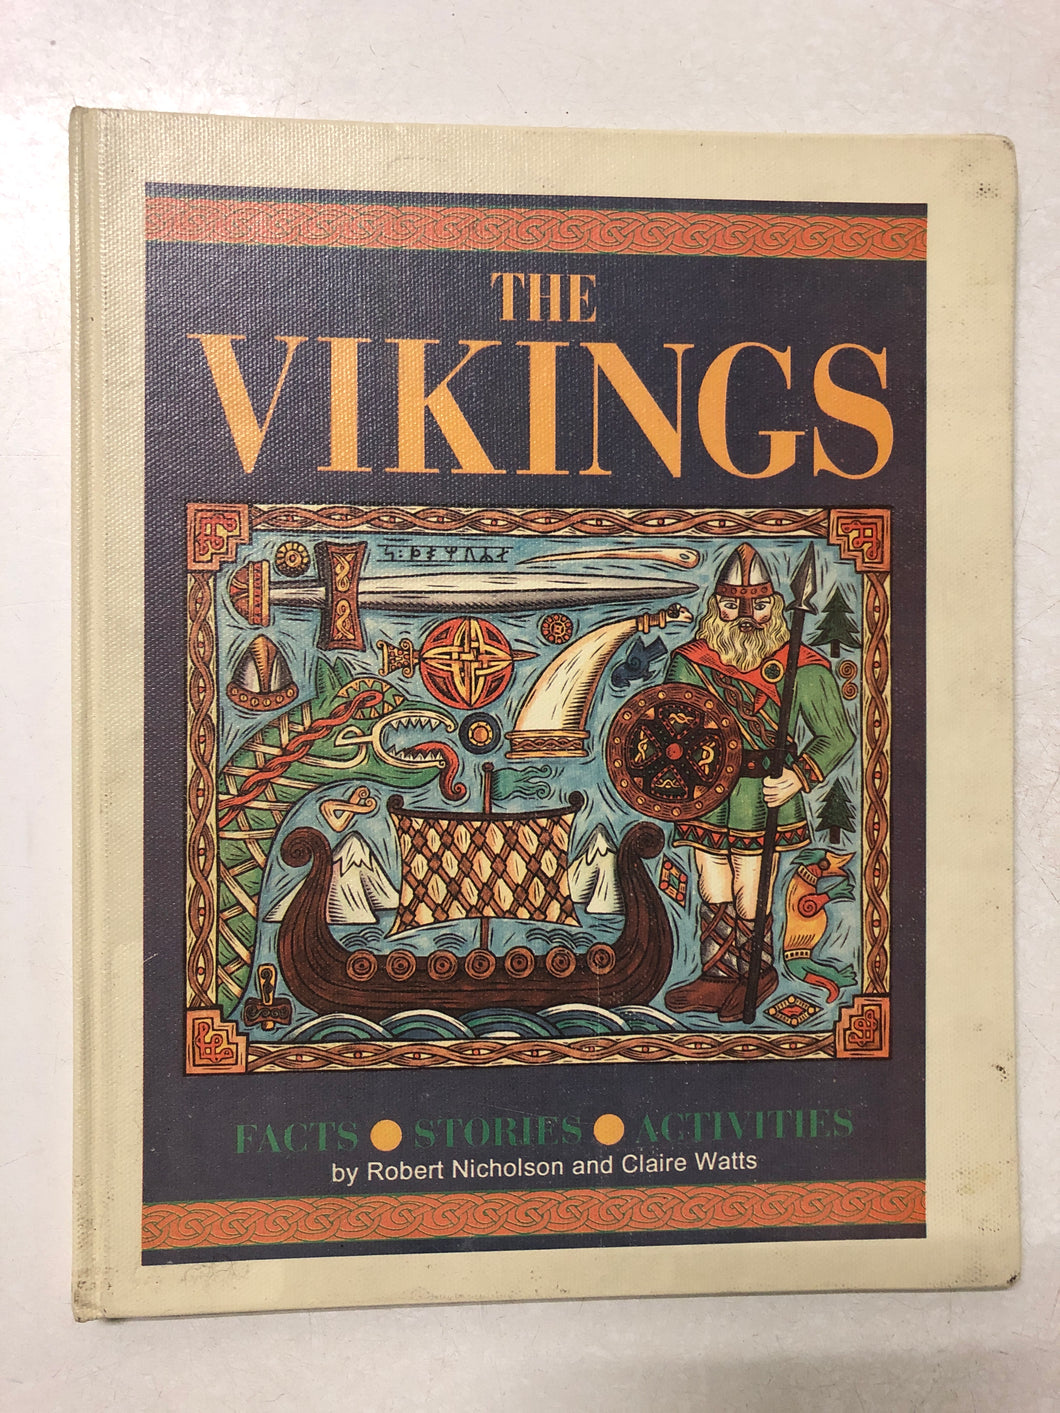 The Vikings Journey Into Civilization - Slick Cat Books 